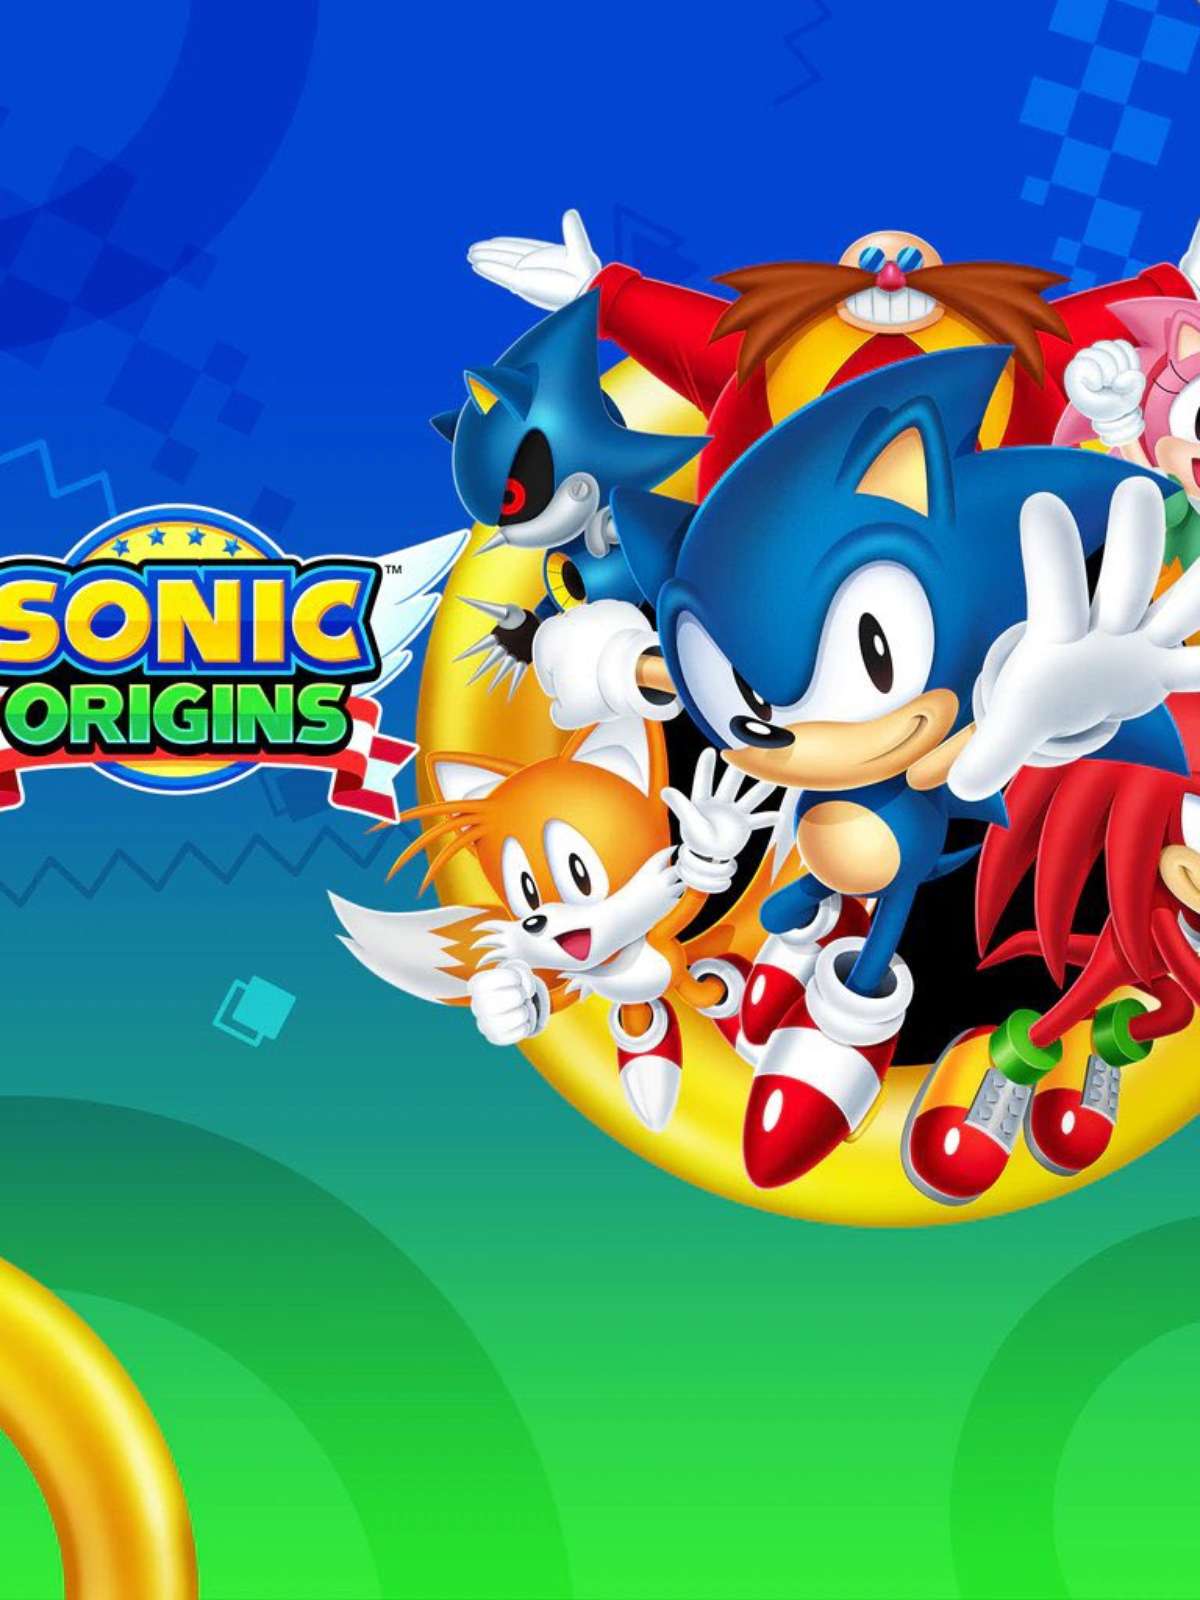 Veja outro pôster do filme Sonic the Hedgehog 2 - PSX Brasil